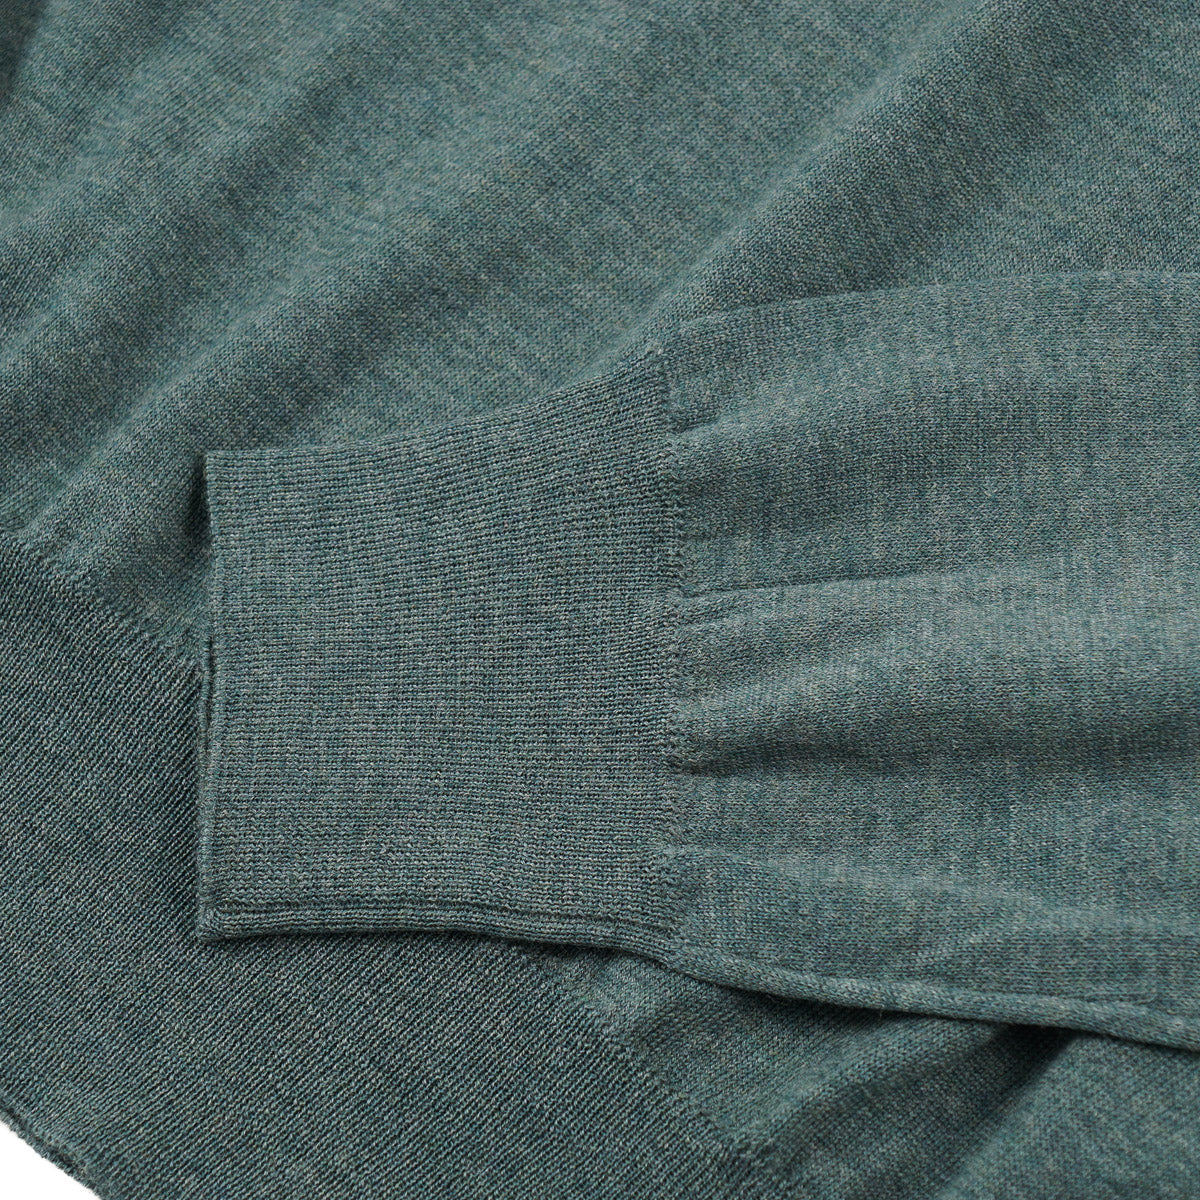 Boglioli Superfine Merino Wool Sweater - Top Shelf Apparel